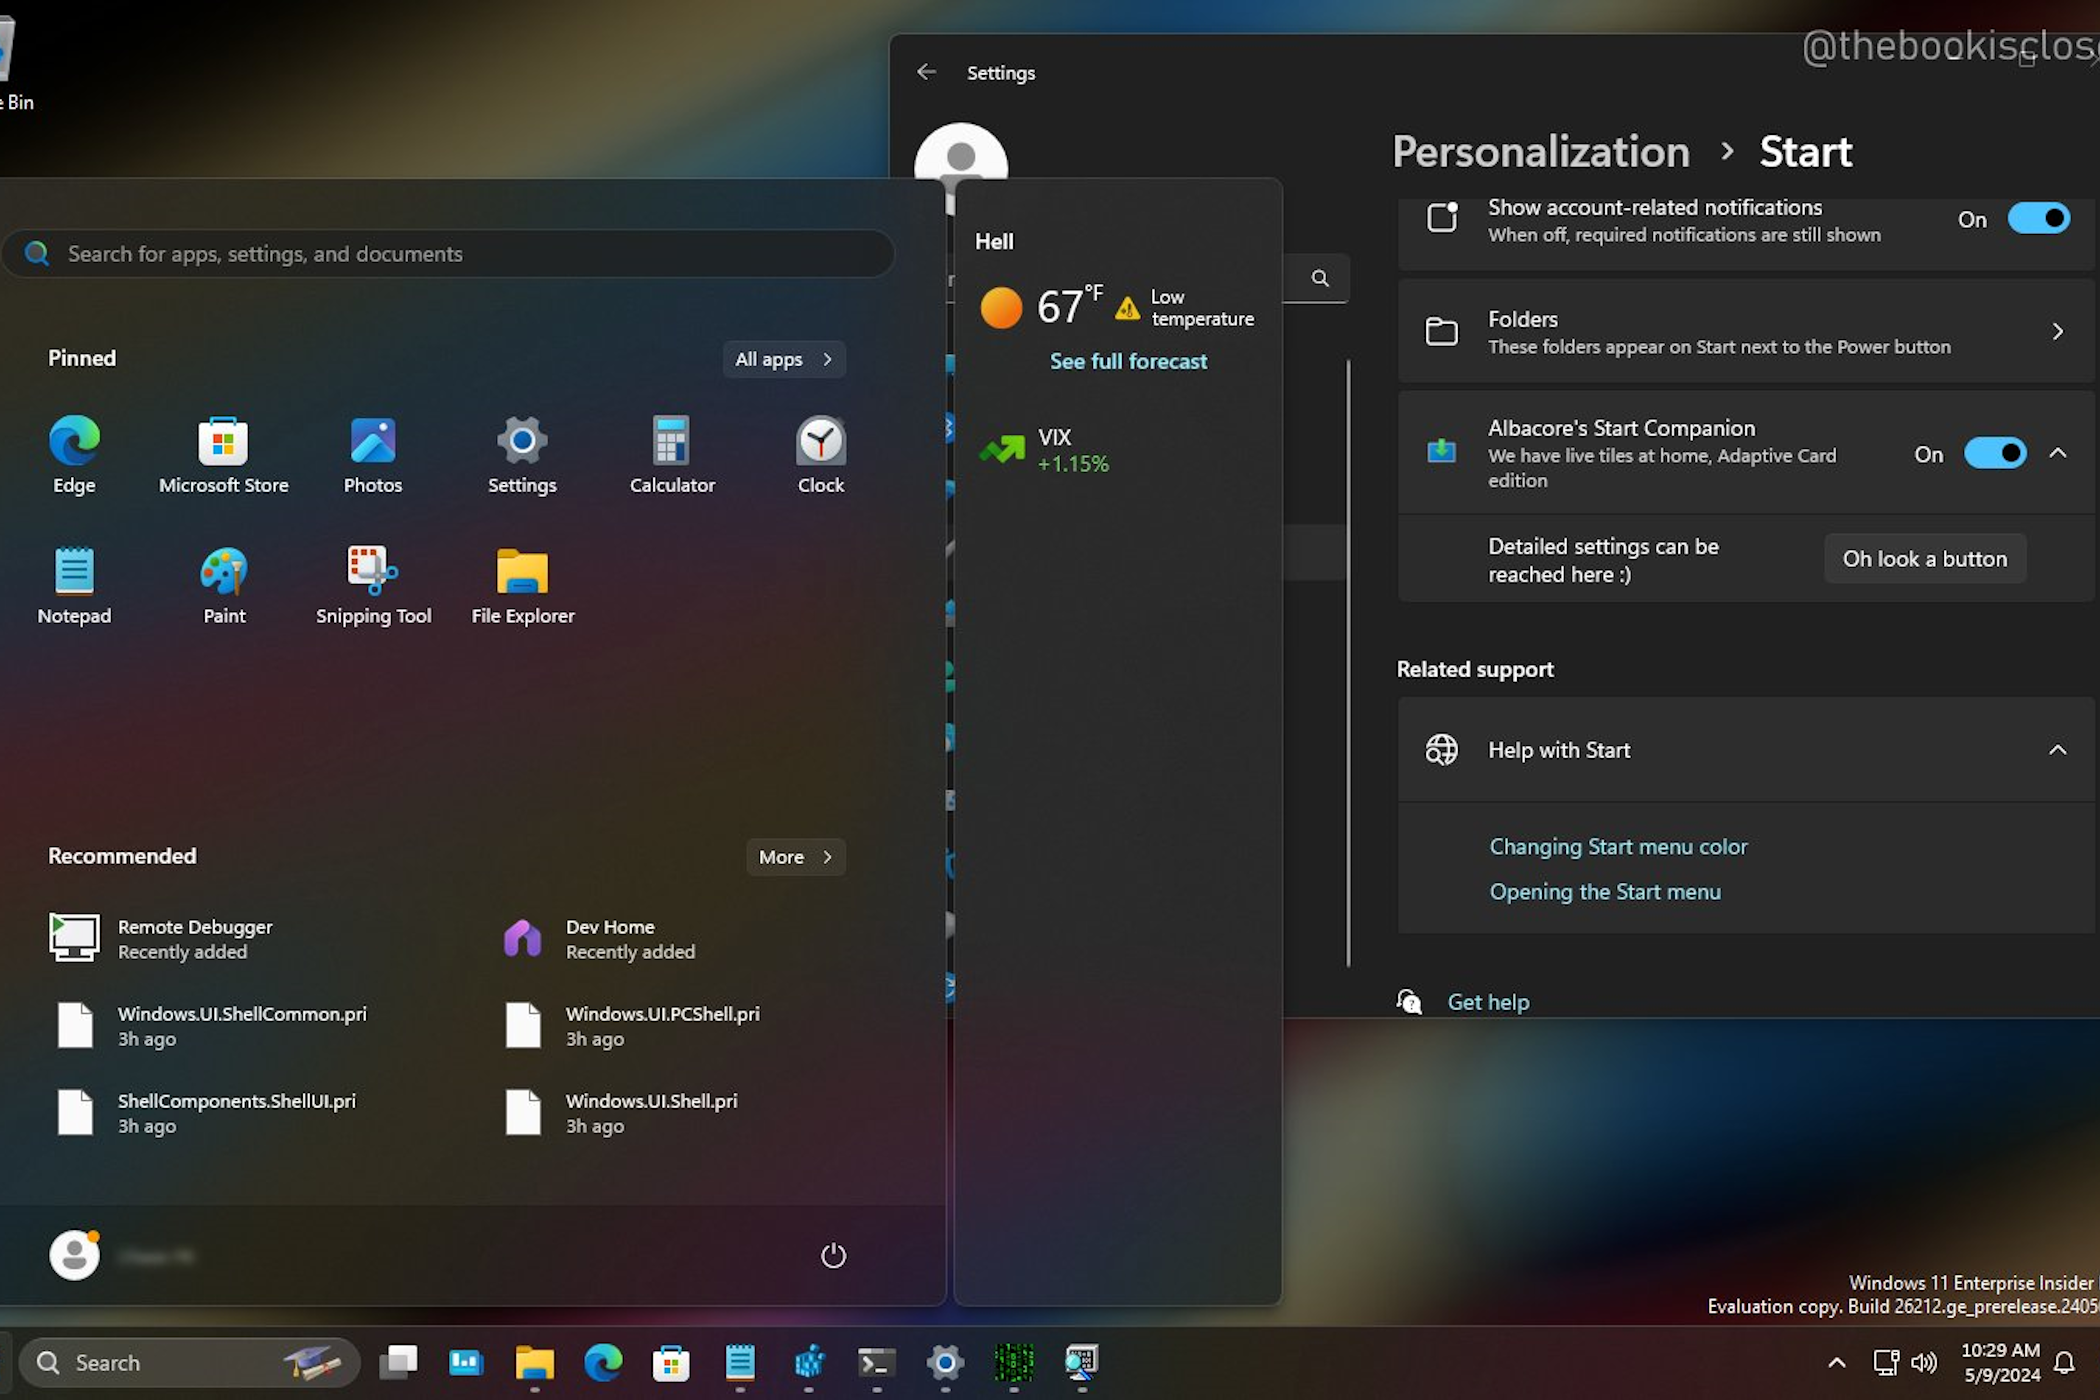 Windows 11 gets a customizable Start menu with side widgets